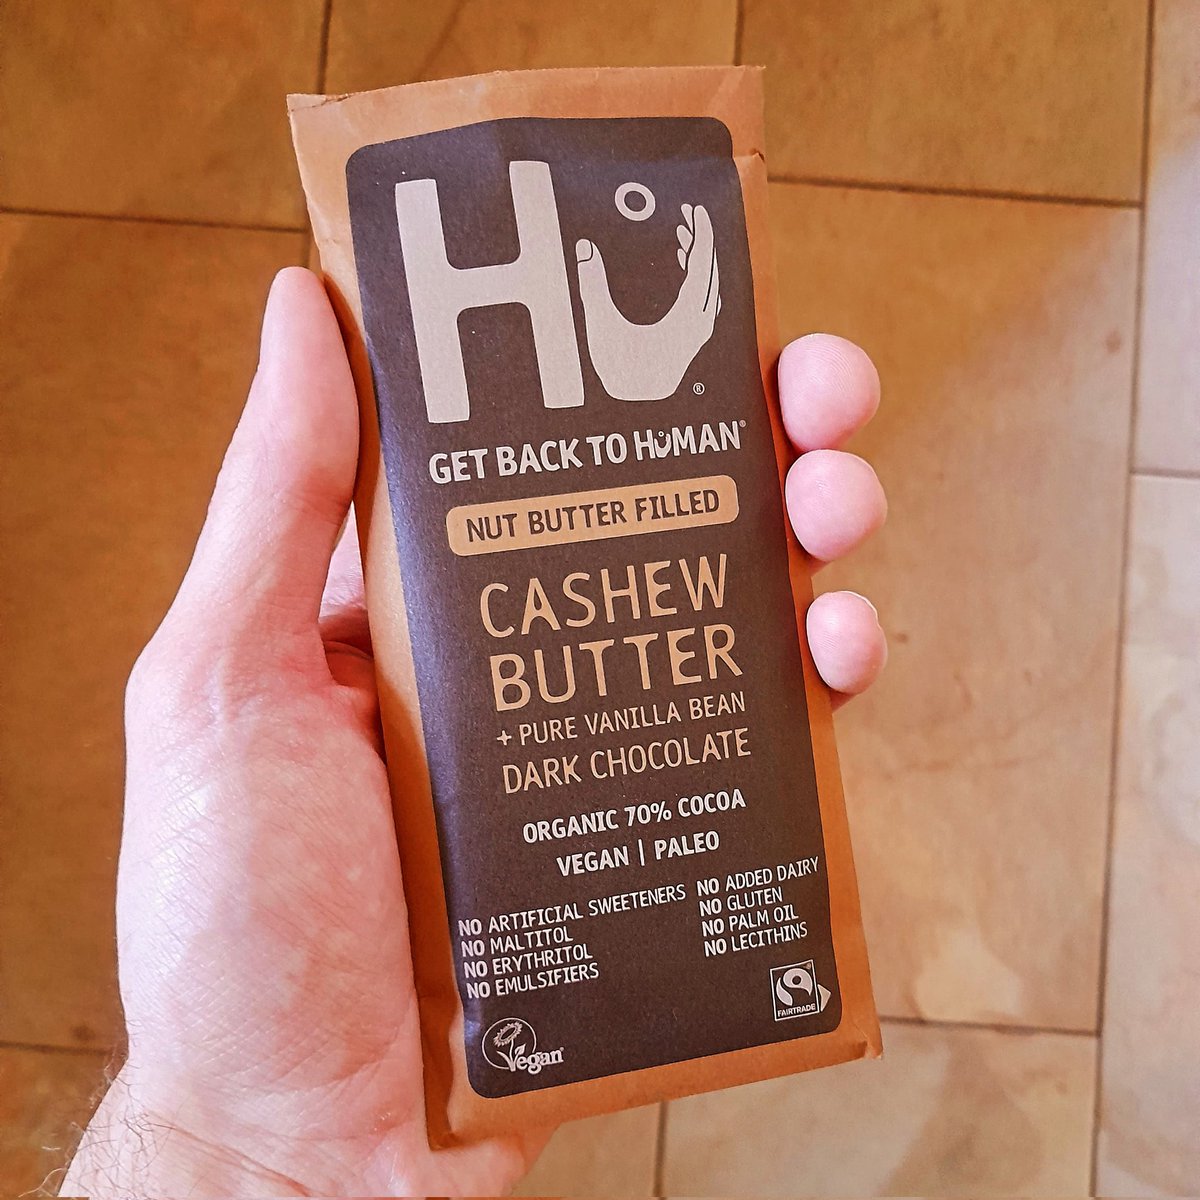 This week ive mainly been addicted to HU's Cashew Butter dark chocolate. #veganhour #veganchocolate